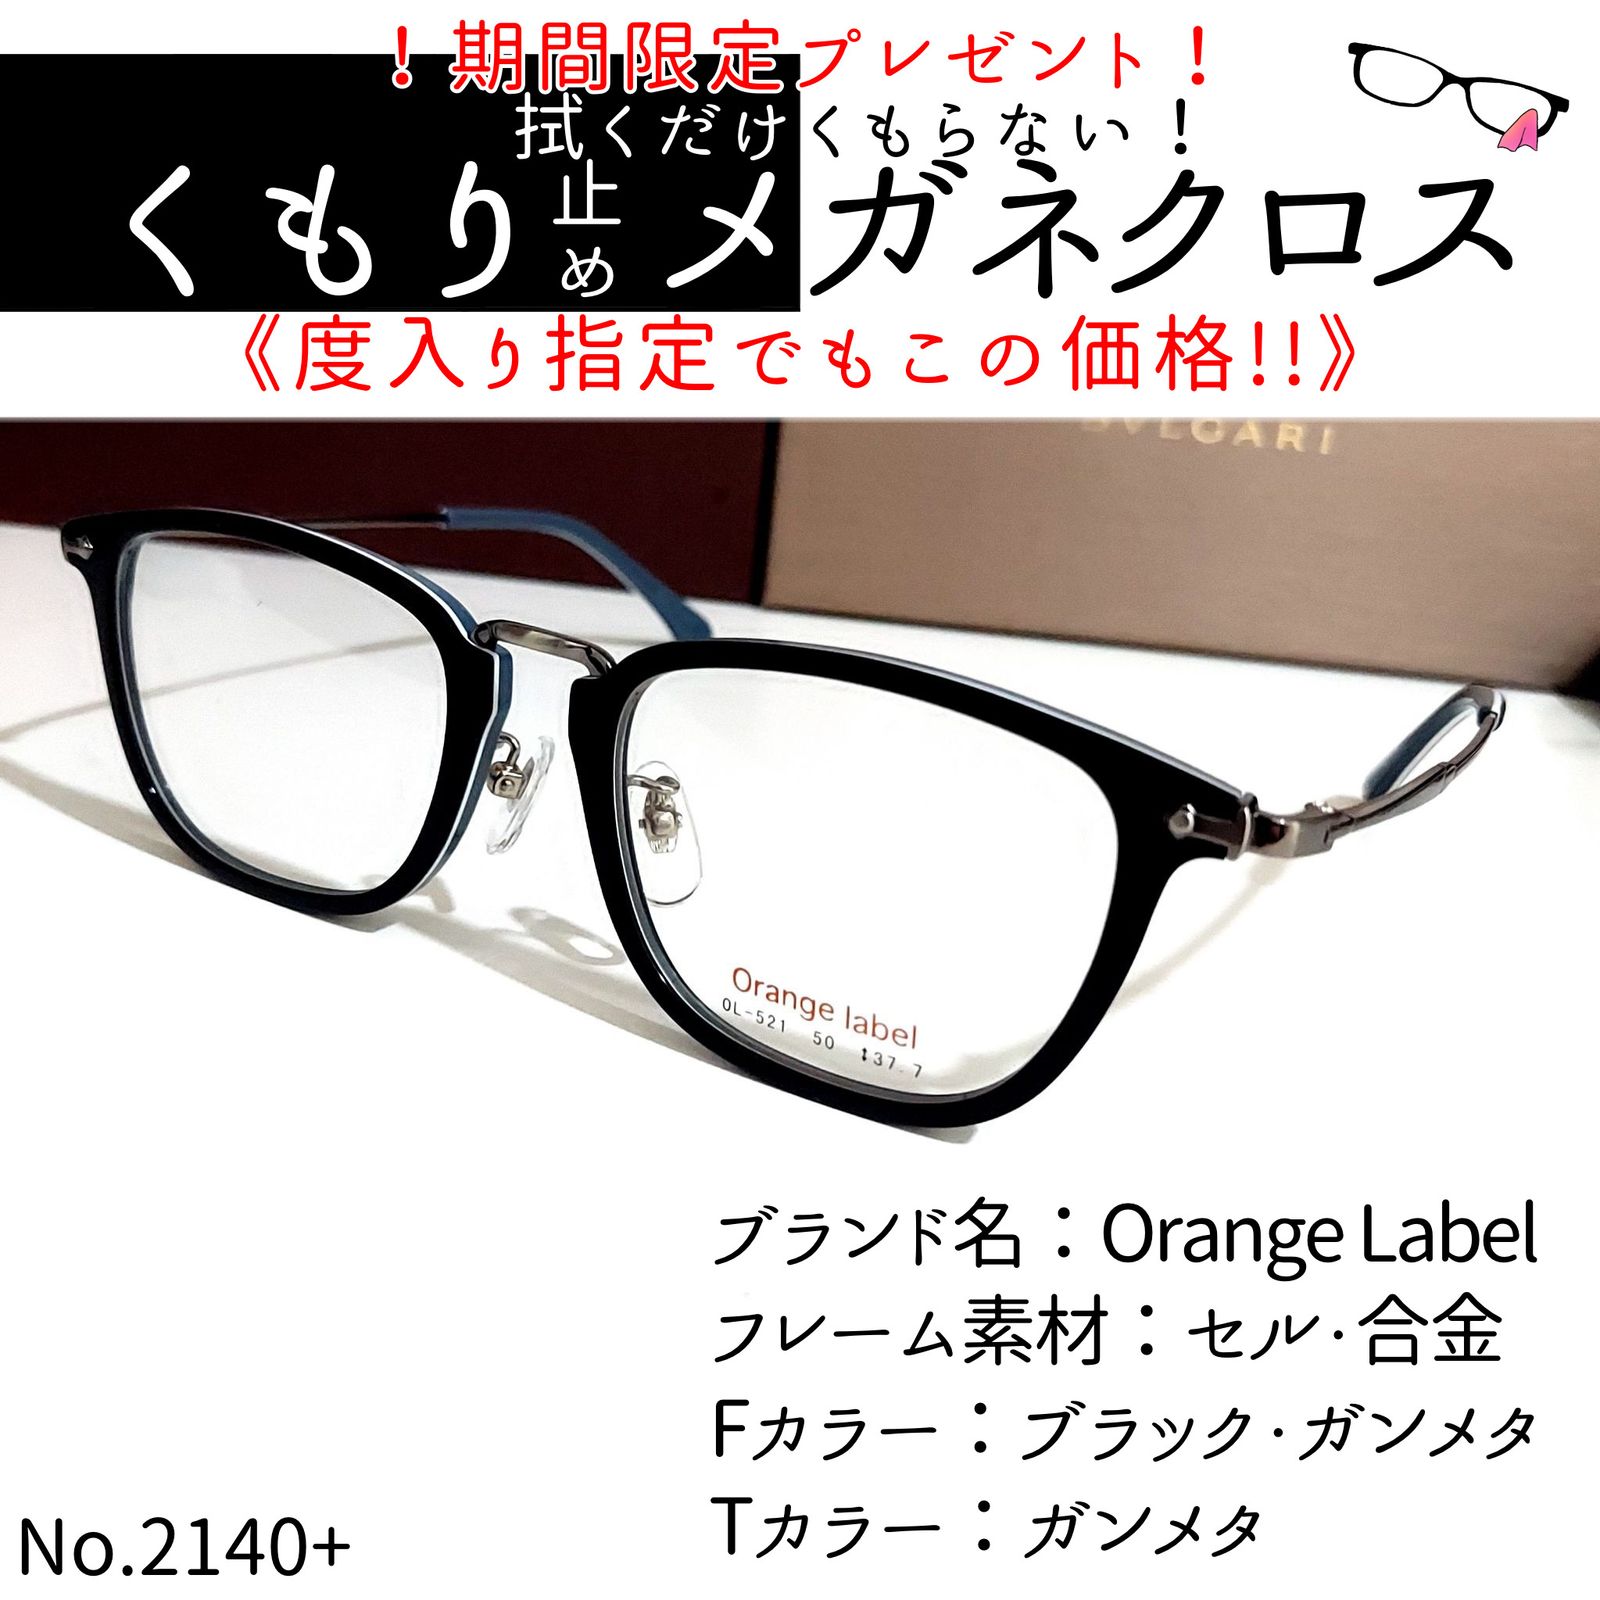 No.2140メガネ Orange Label【度数入り込み価格】-